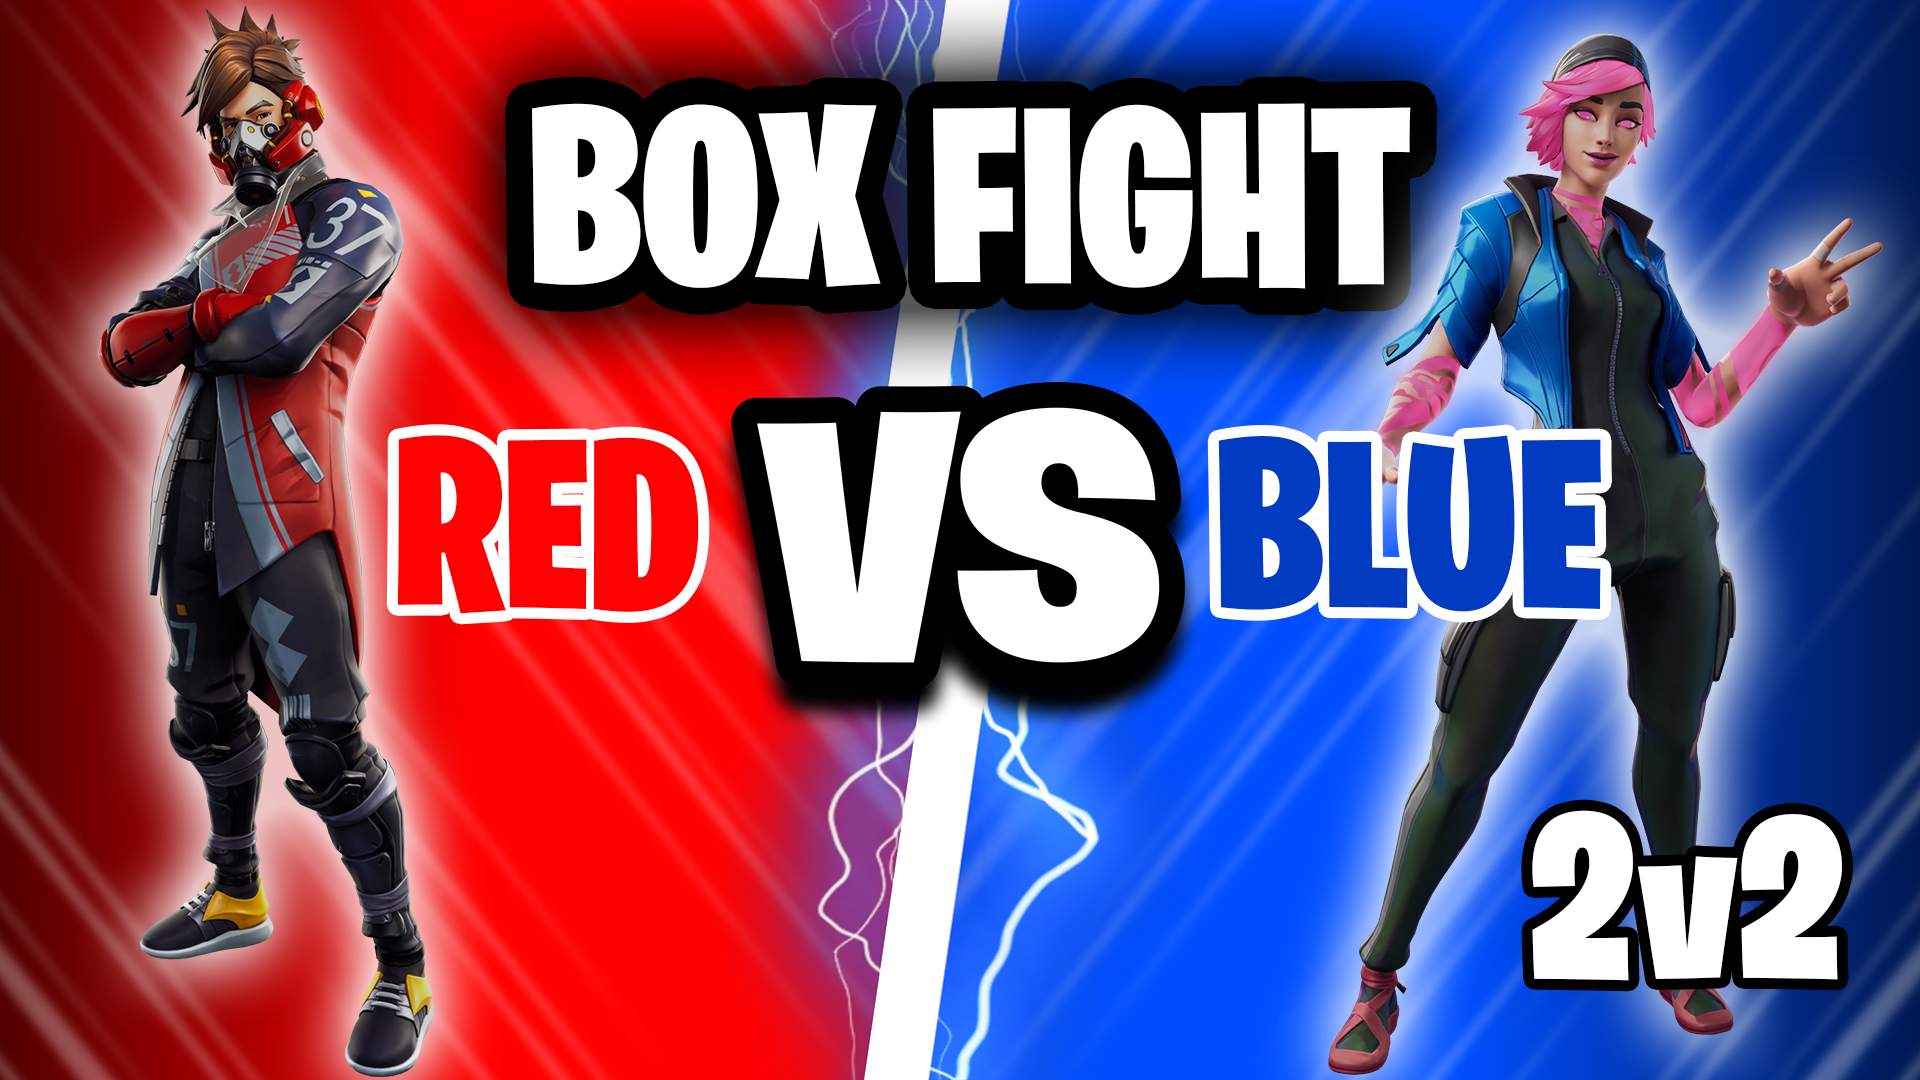 RED vs BLUE BOX FIGHT (2v2)